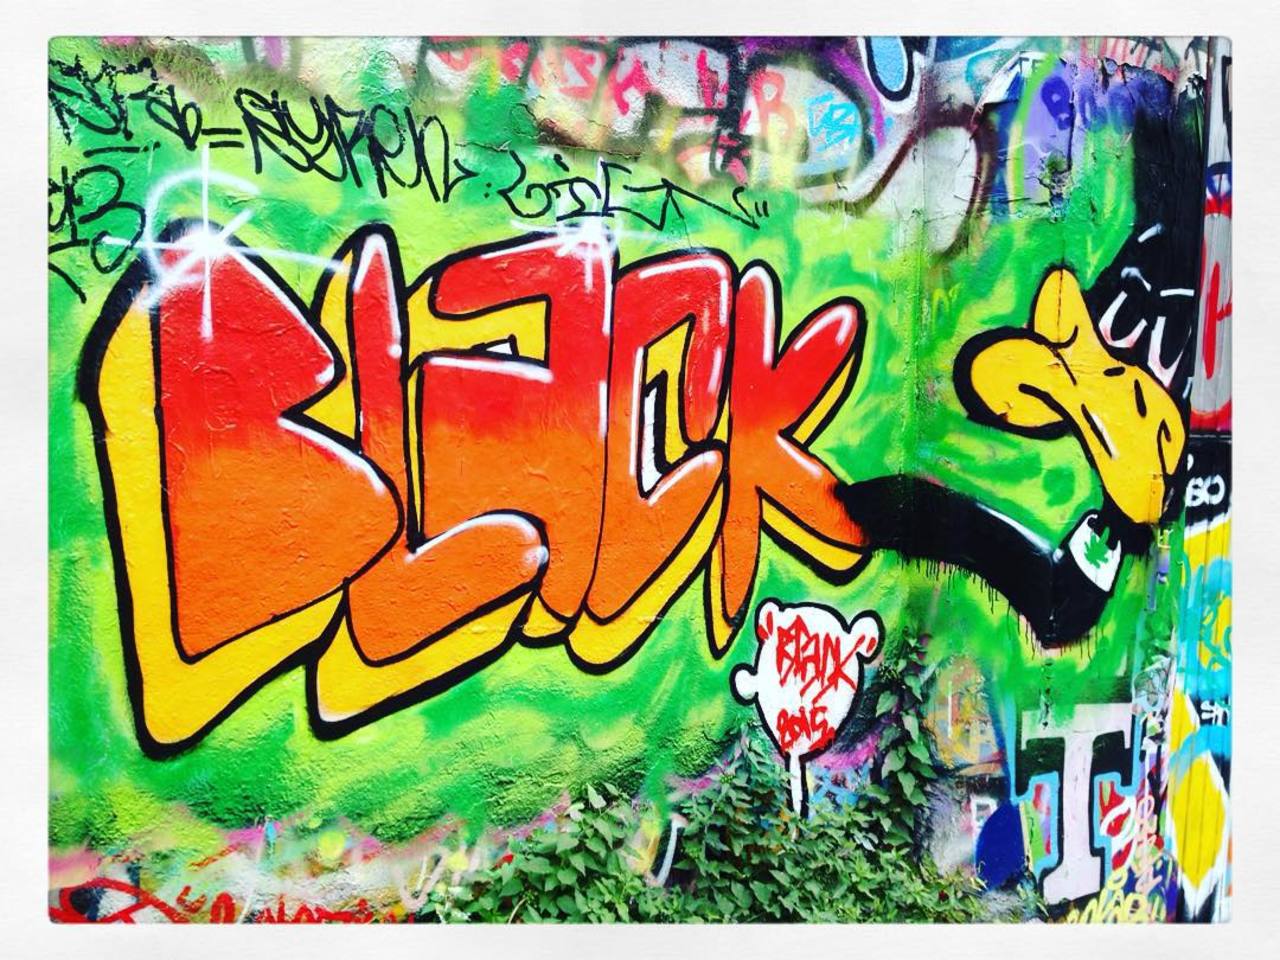 #Paris #graffiti photo by @cibti4987 http://ift.tt/1Jw091g #StreetArt http://t.co/Hm2thJmeZn